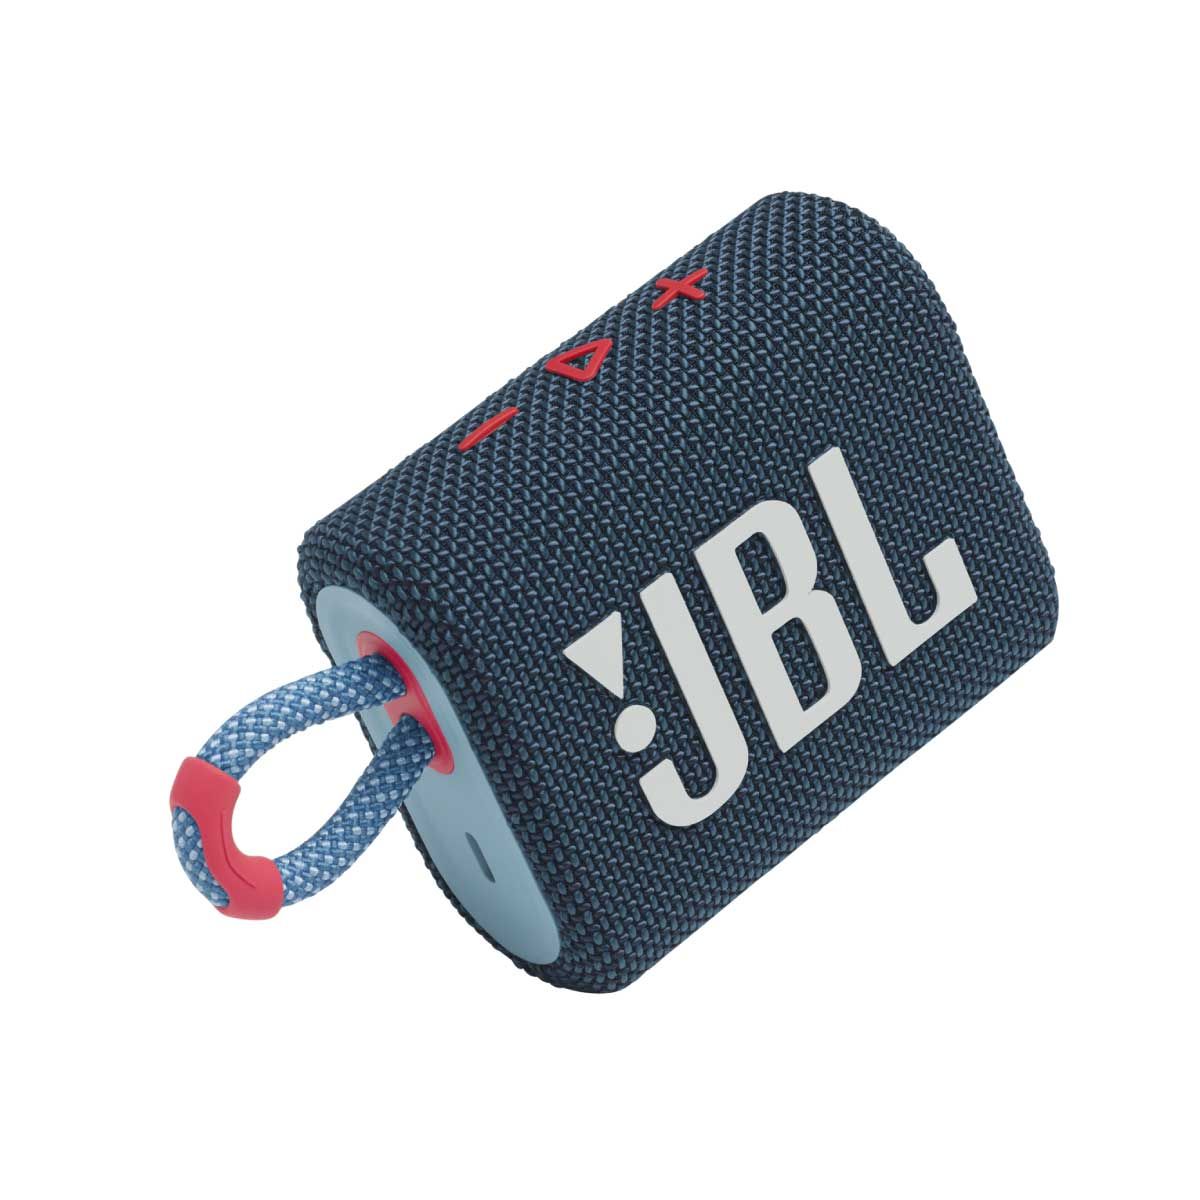 JBL ลำโพงพกพาบลูทูธ รุ่น GO3/BLPK สีฟ้า/สีชมพู กันน้ำ/กันฝุ่น